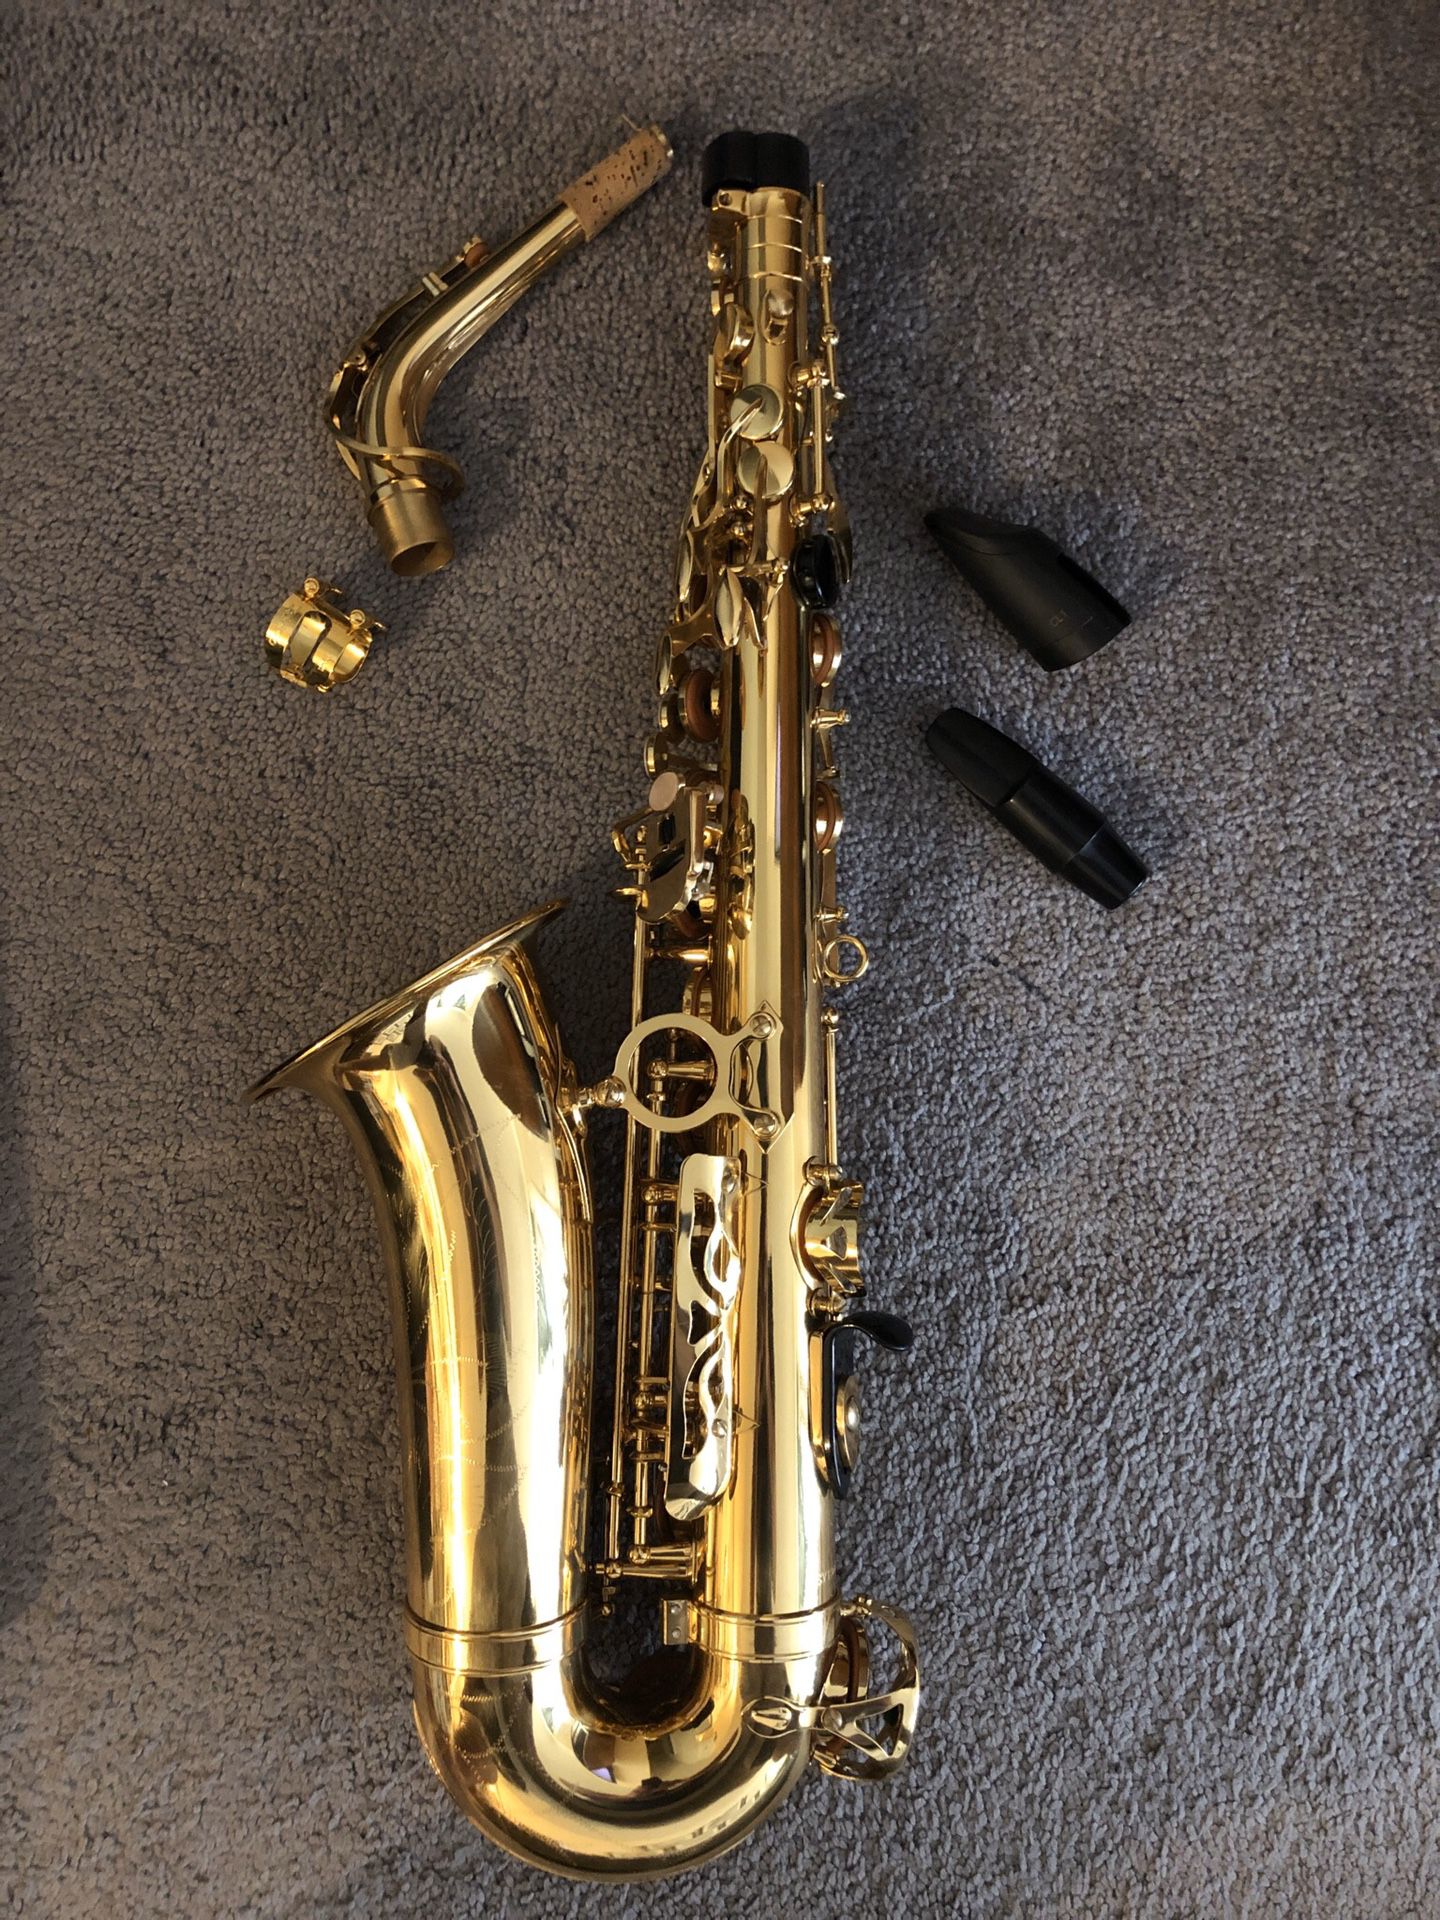 Jean Paul USA AS-400 Saxophone